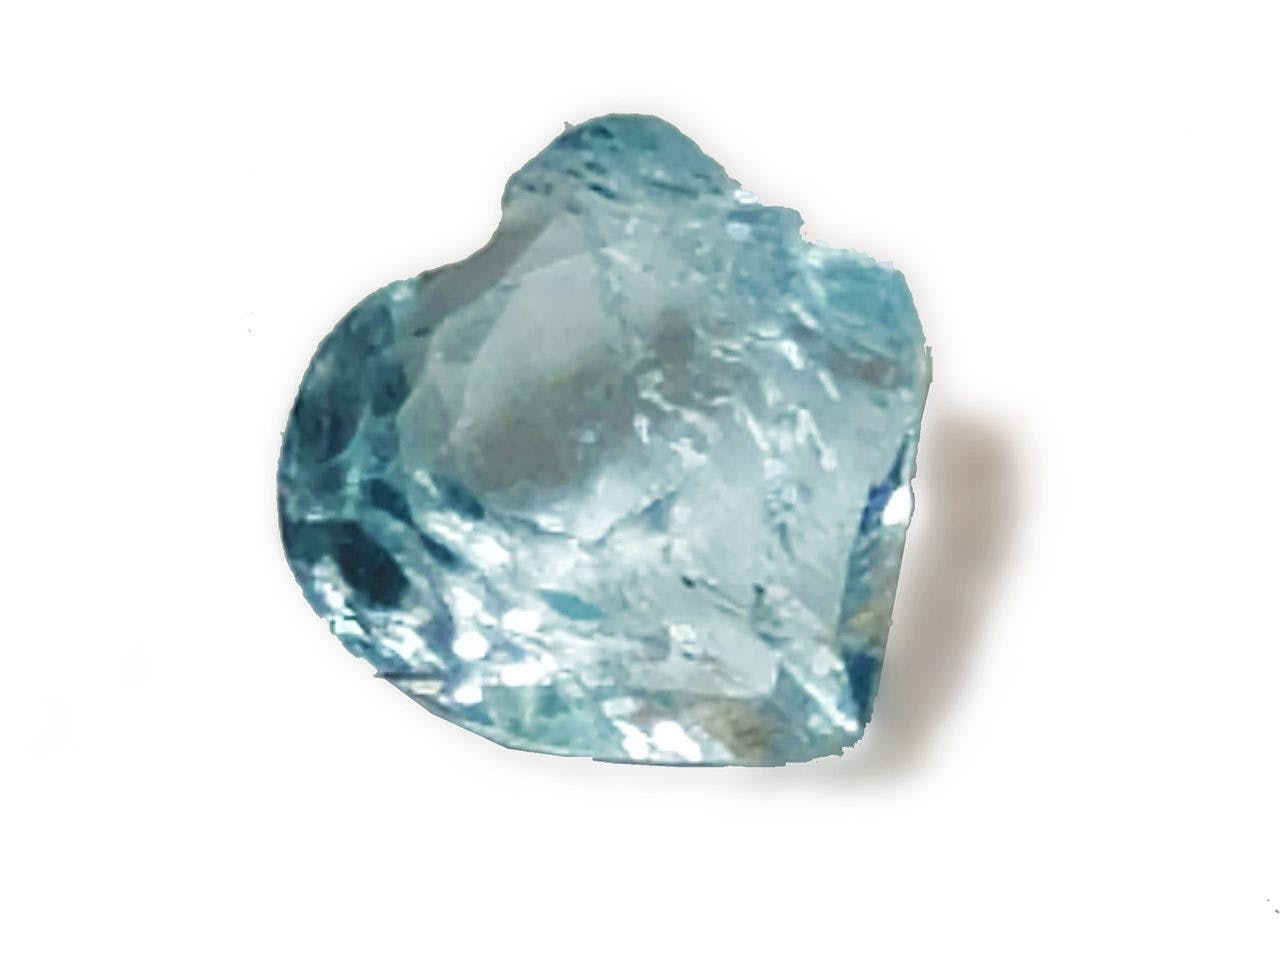 broken heart-shaped aquamarine